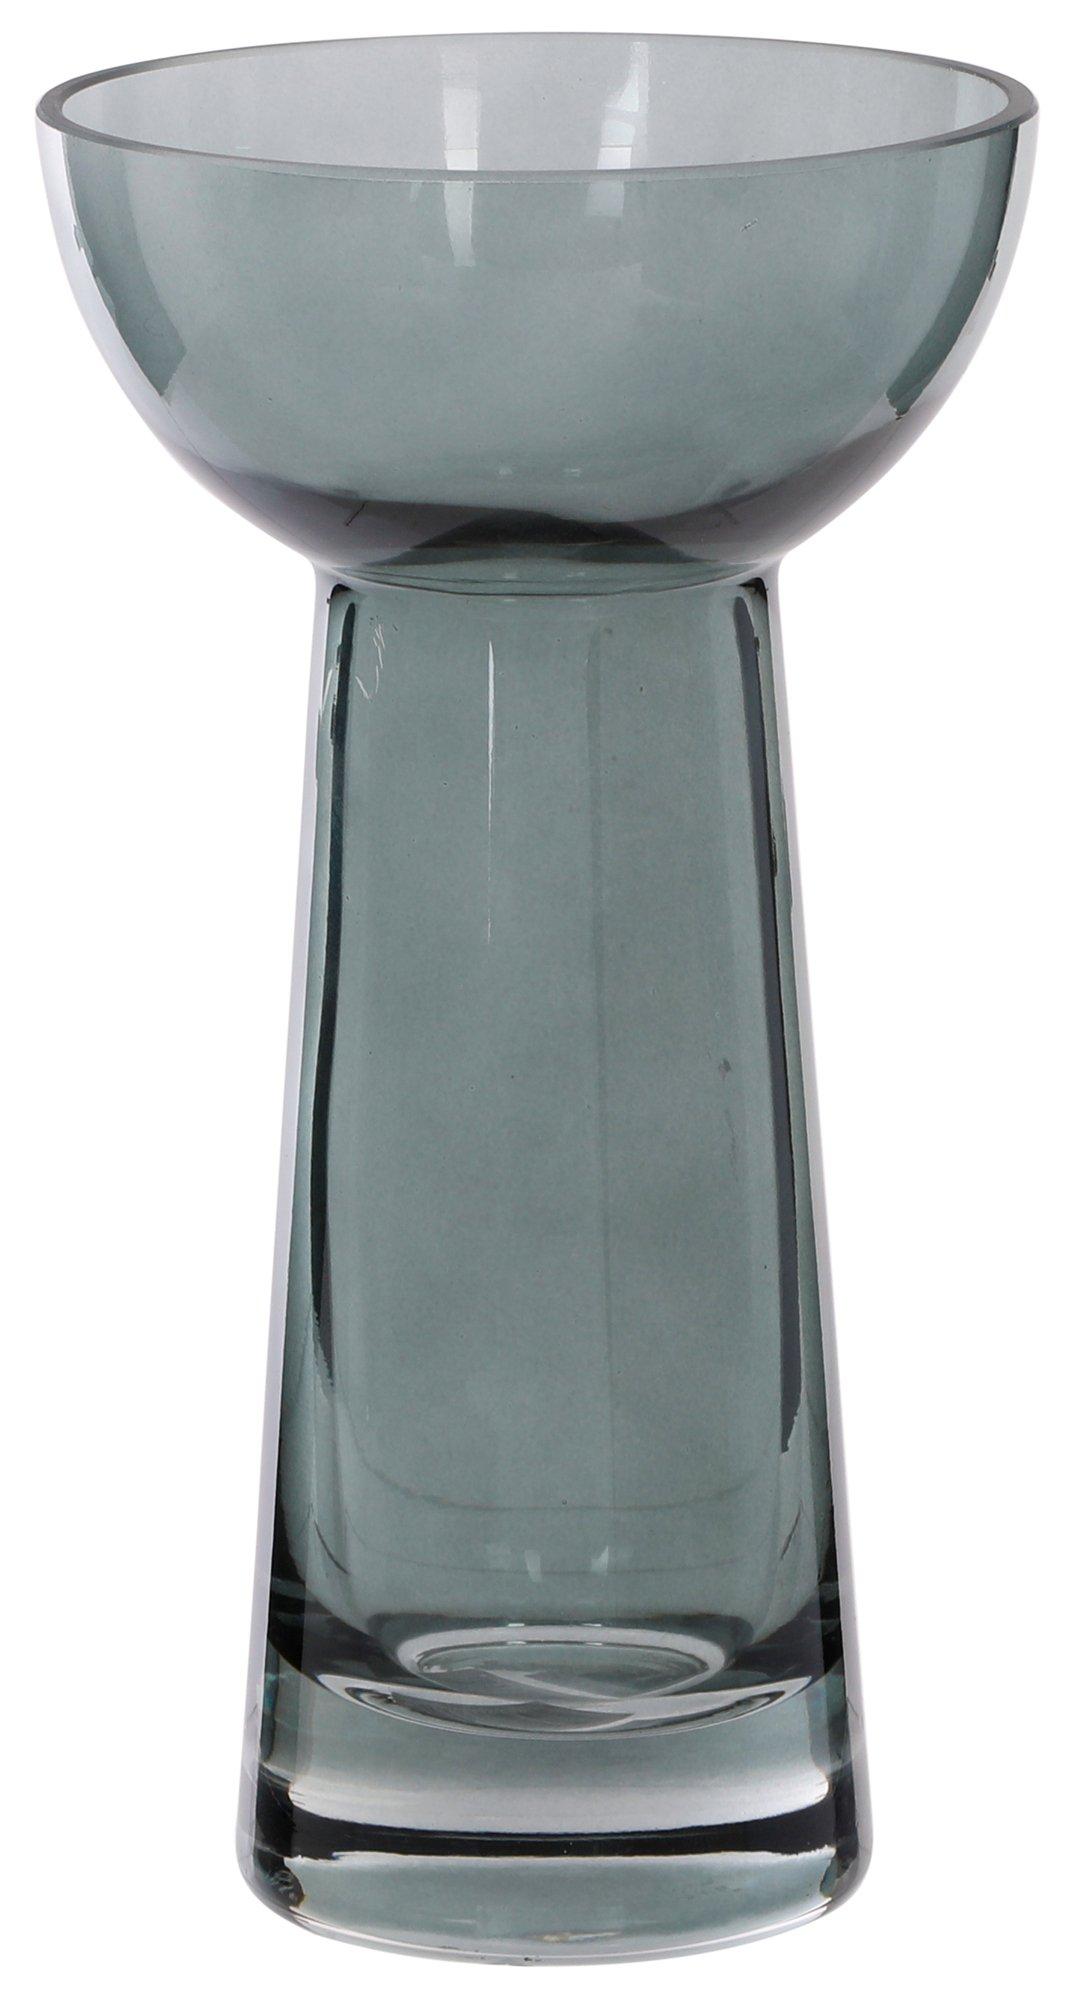 Decorative Modern Glass Vase